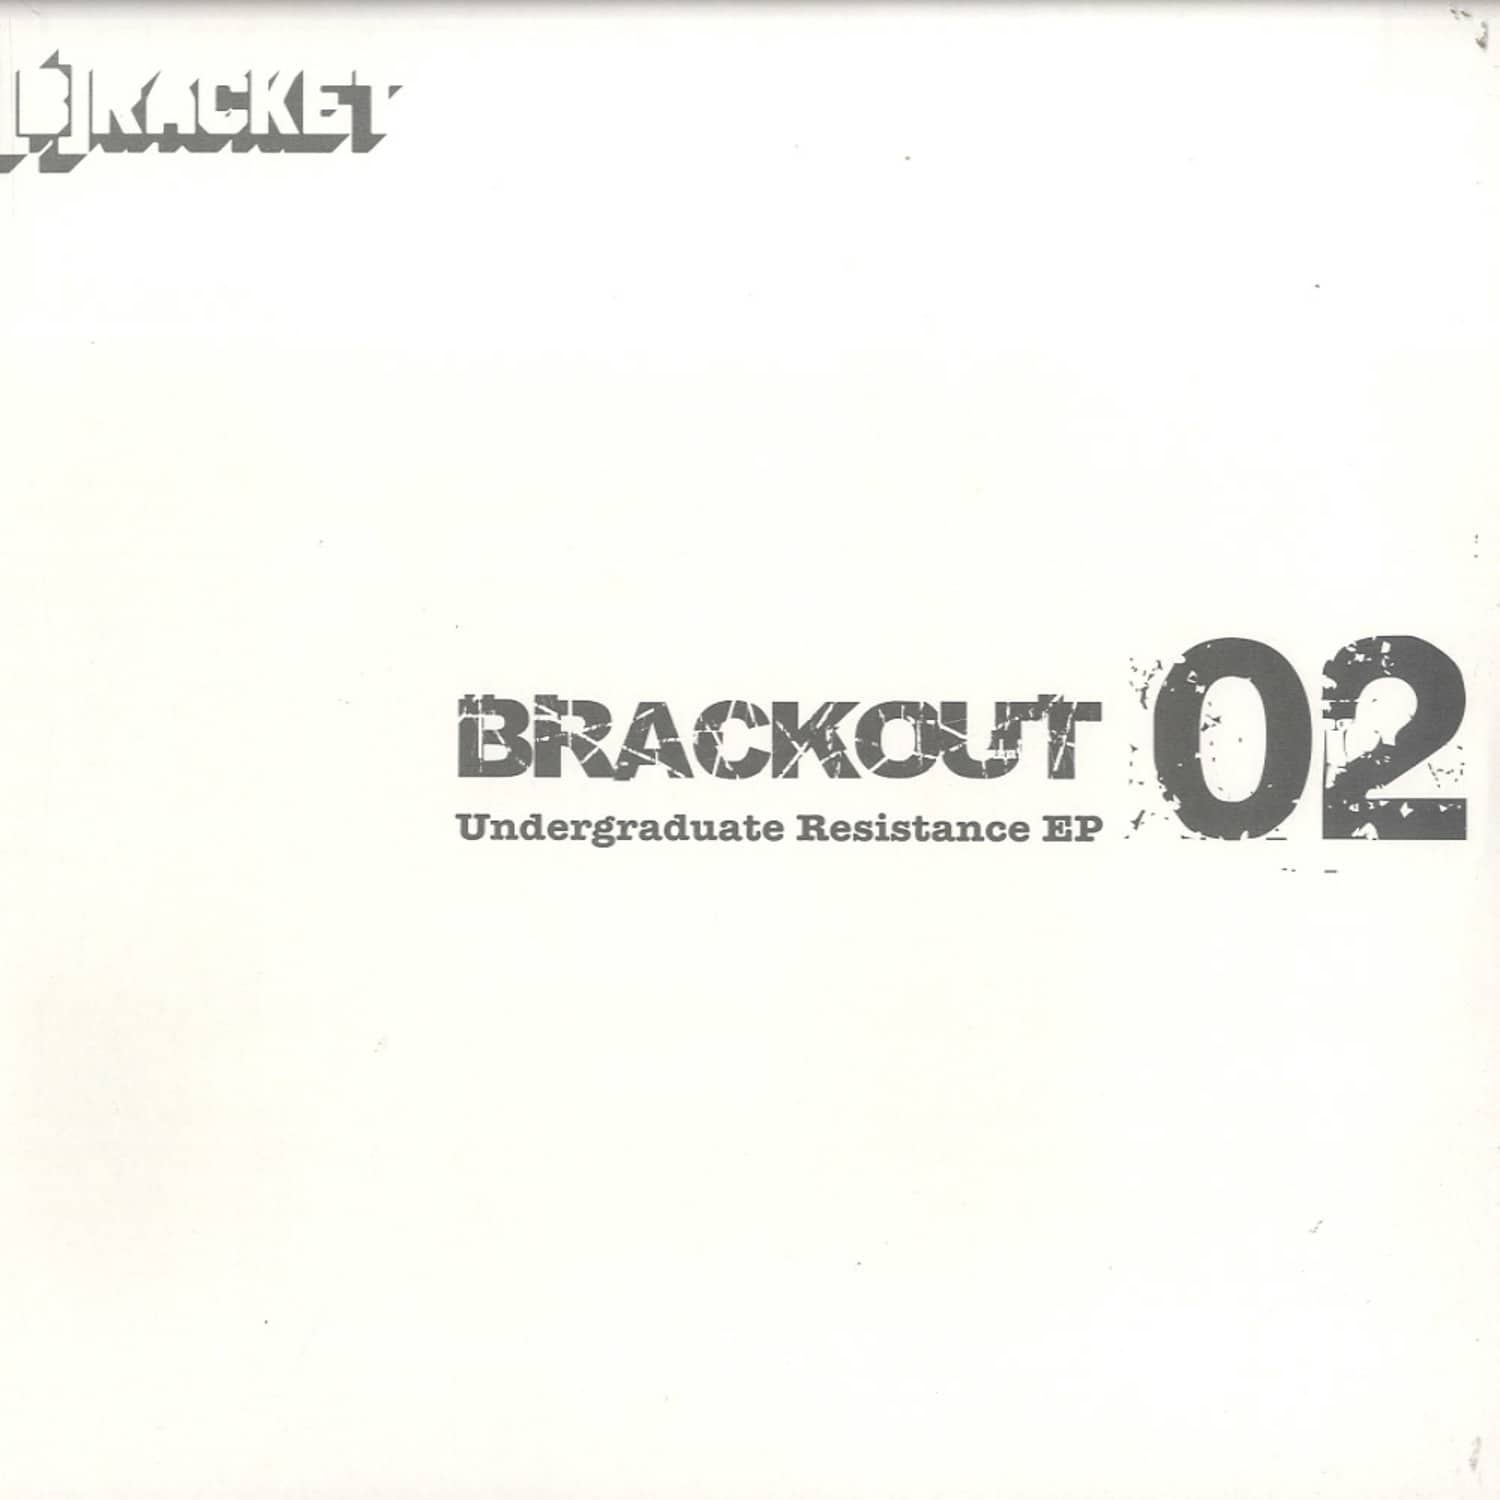 Bracket aka Ben Brydon - UNDERGRADUATE RESISTANCE EP